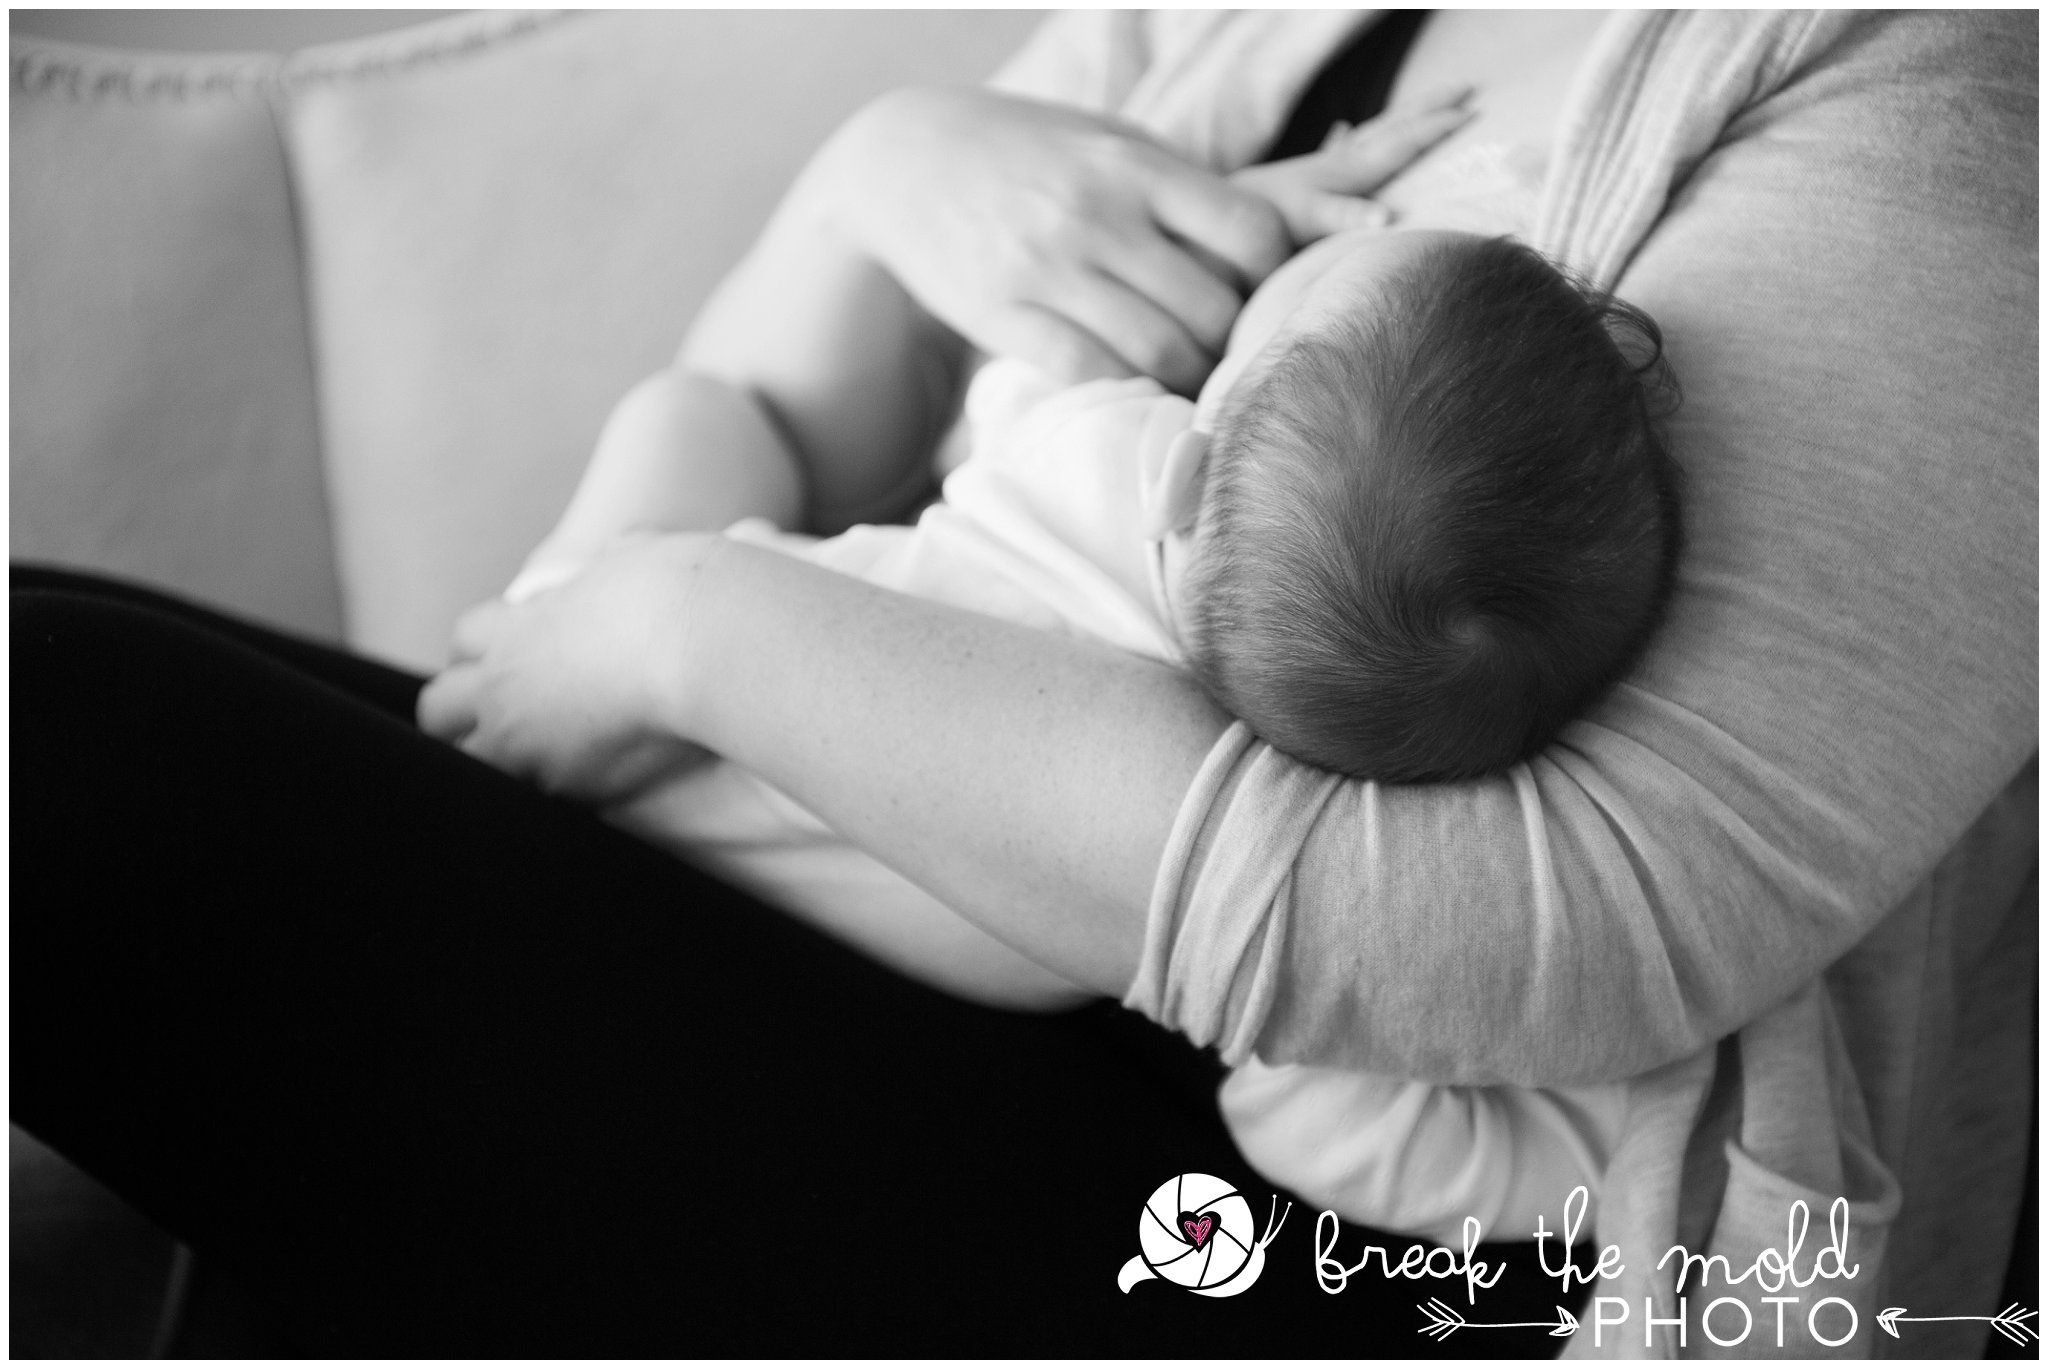 break-the-mold-photo-nursing-body-love-baby-pregnant-women-powerful-breastfeeding-sessions_7197.jpg